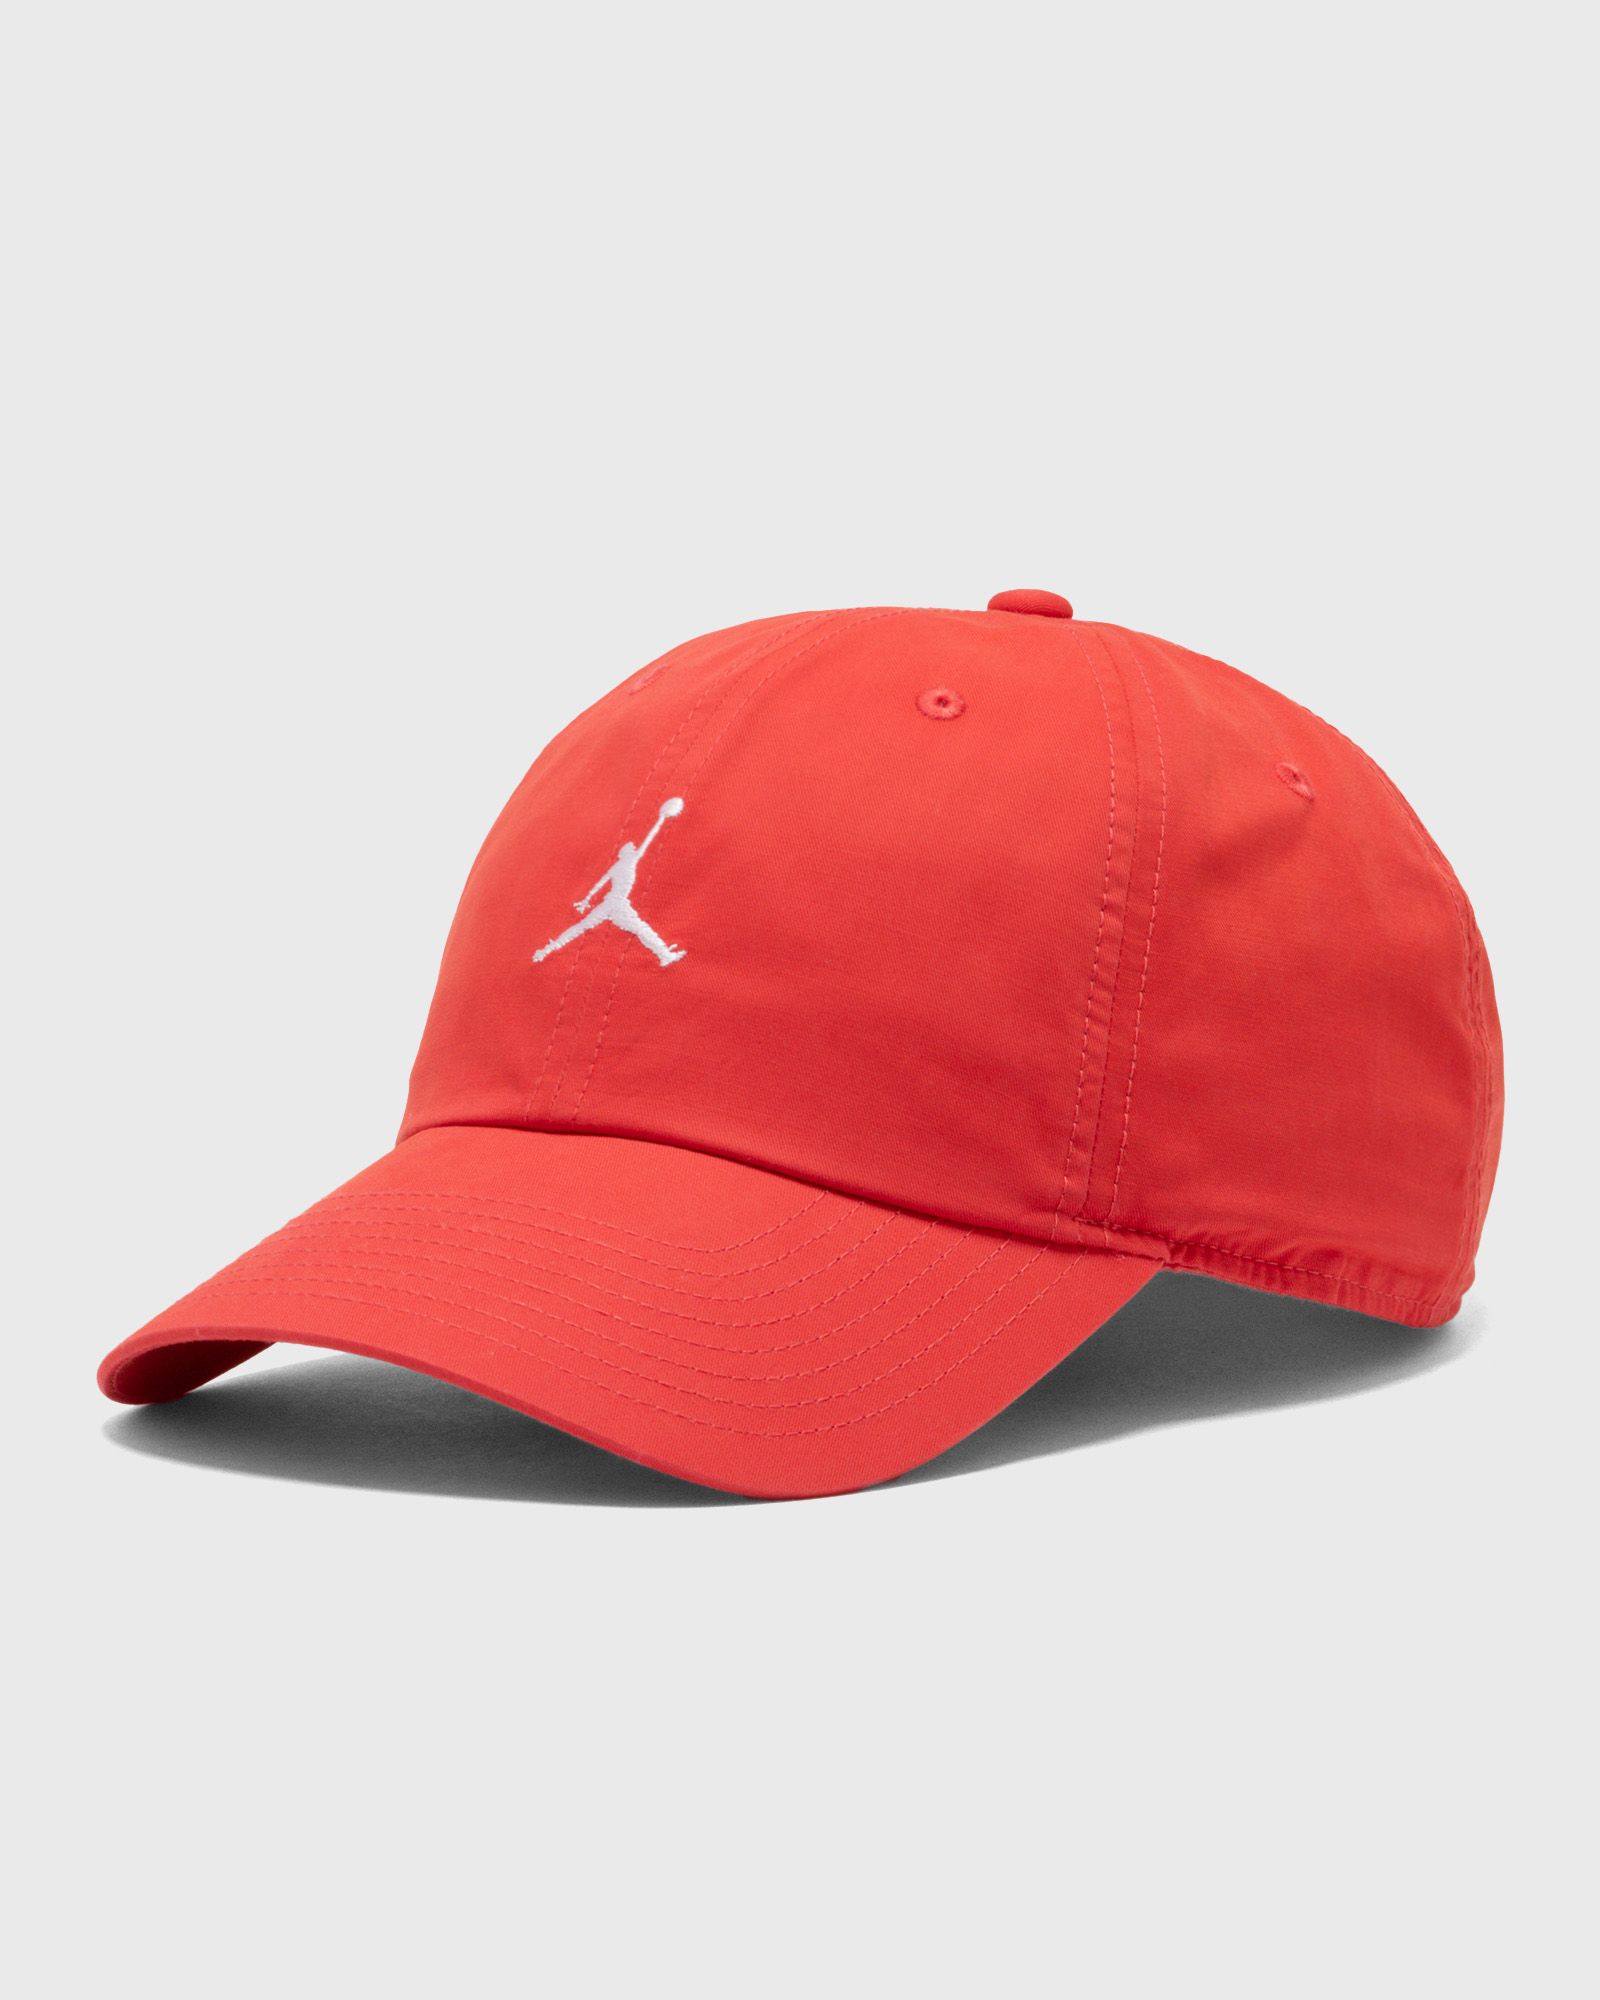 Jordan Club Cap Adjustable Unstructured Hat men Caps red in Größe:M/L von Jordan